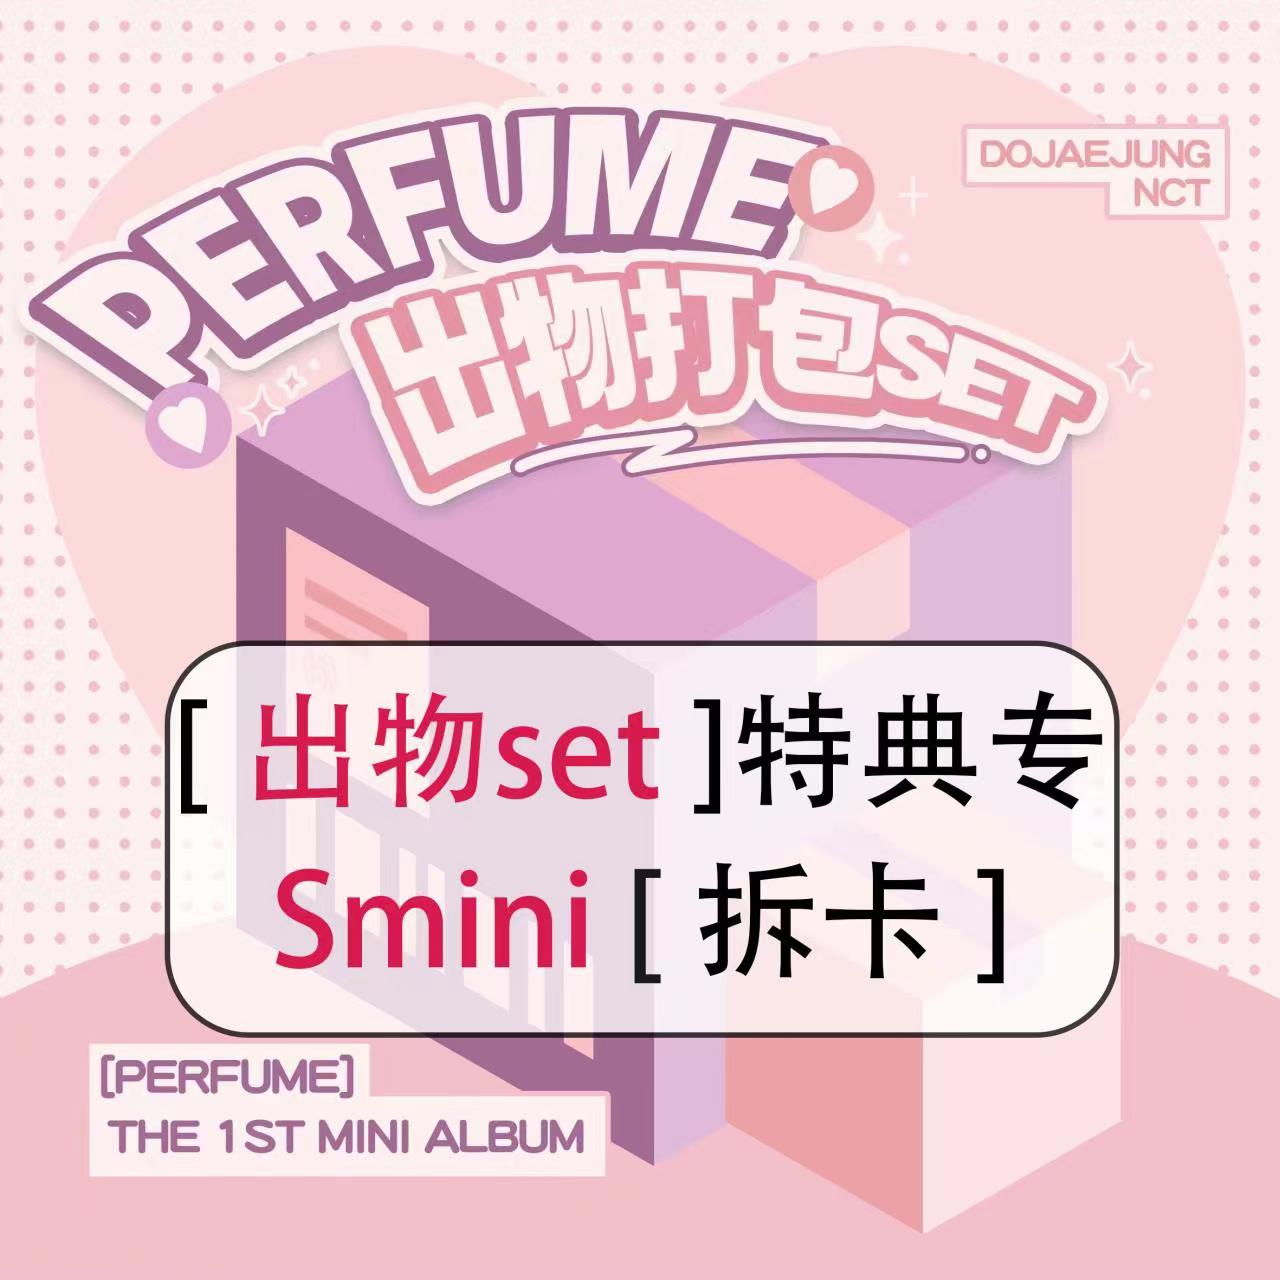 [拆卡专 出物打包set] NCT DOJAEJUNG - The 1st Mini Album [Perfume] (SMini Ver.)_道英吧_DoYoungBar